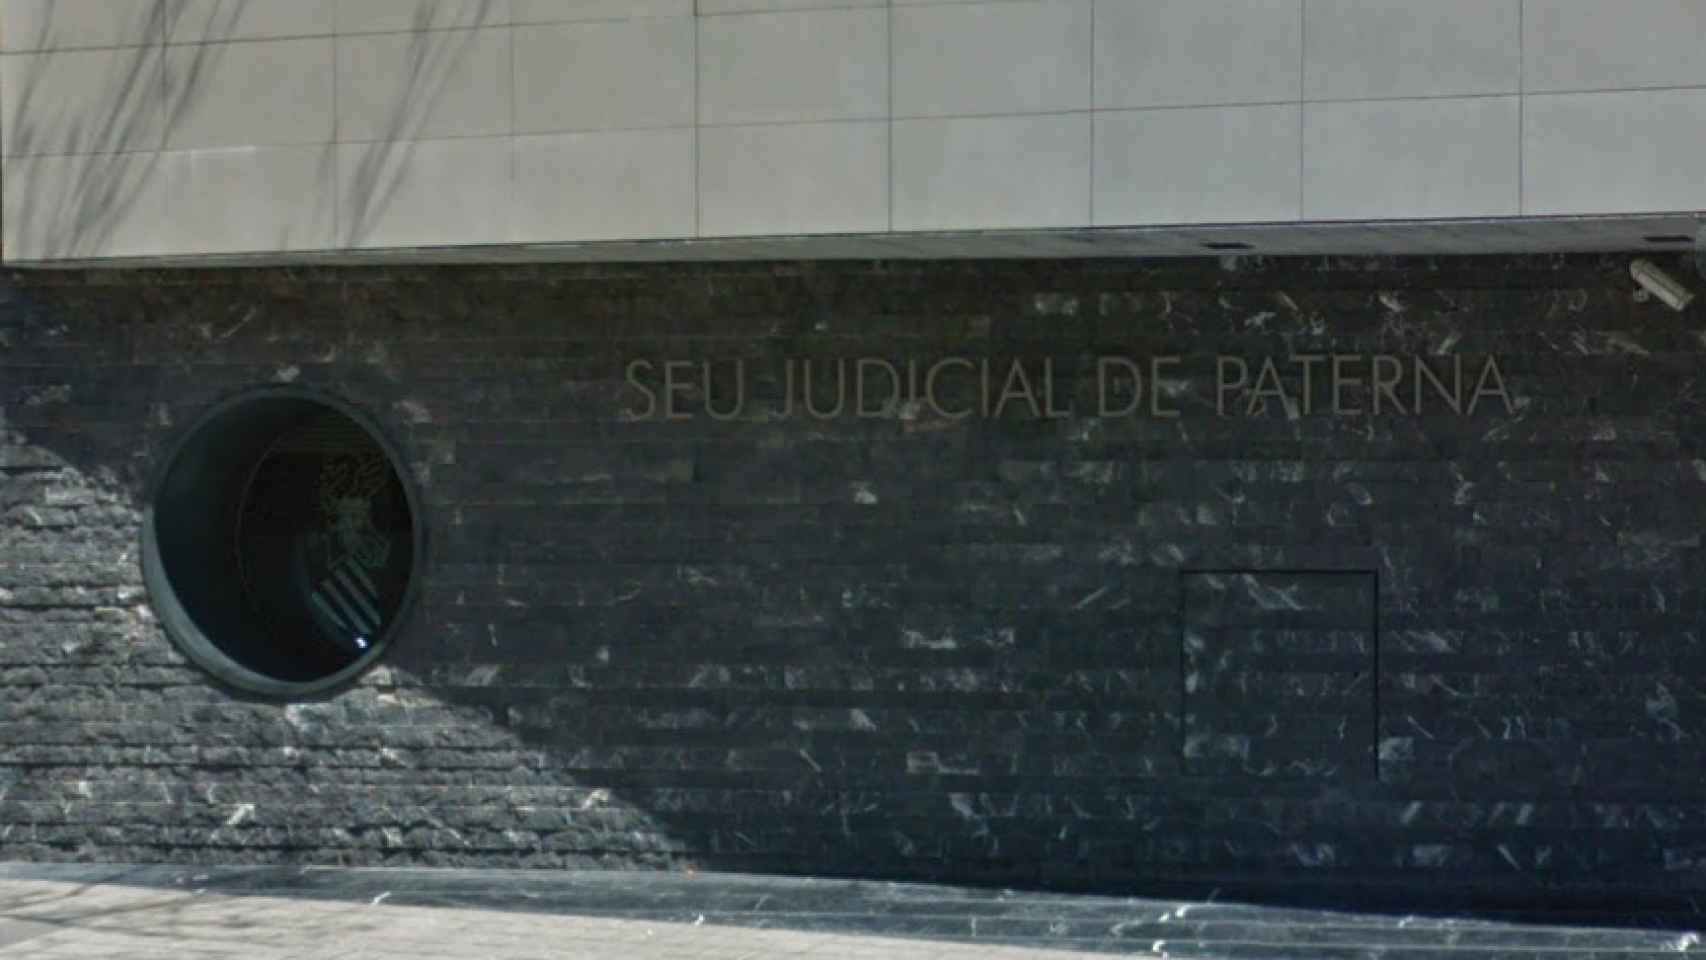 La sede judicial de Paterna.